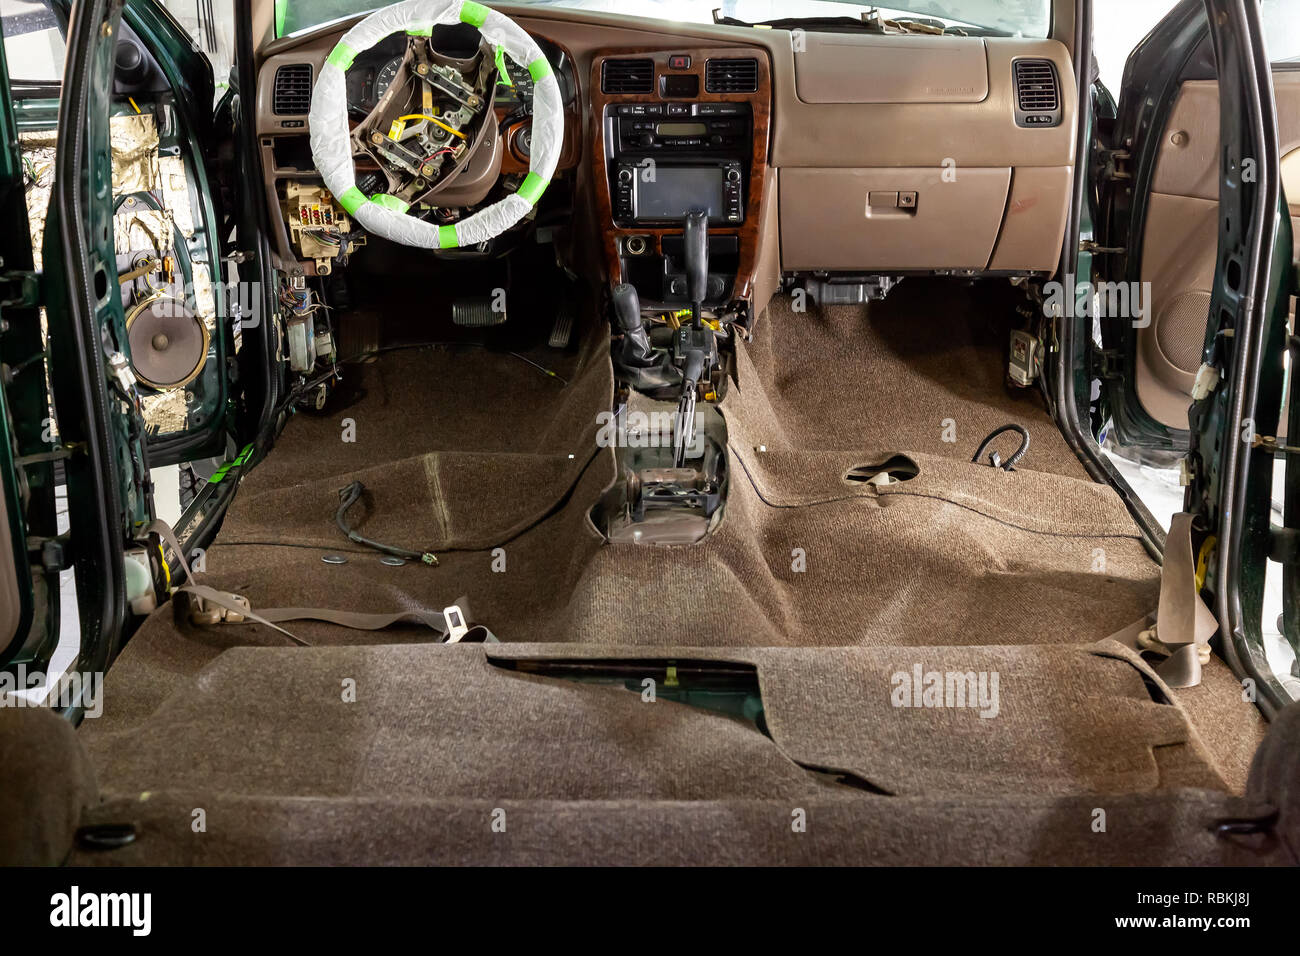 Restoration Of The Car Beige Interior The Steering Wheel